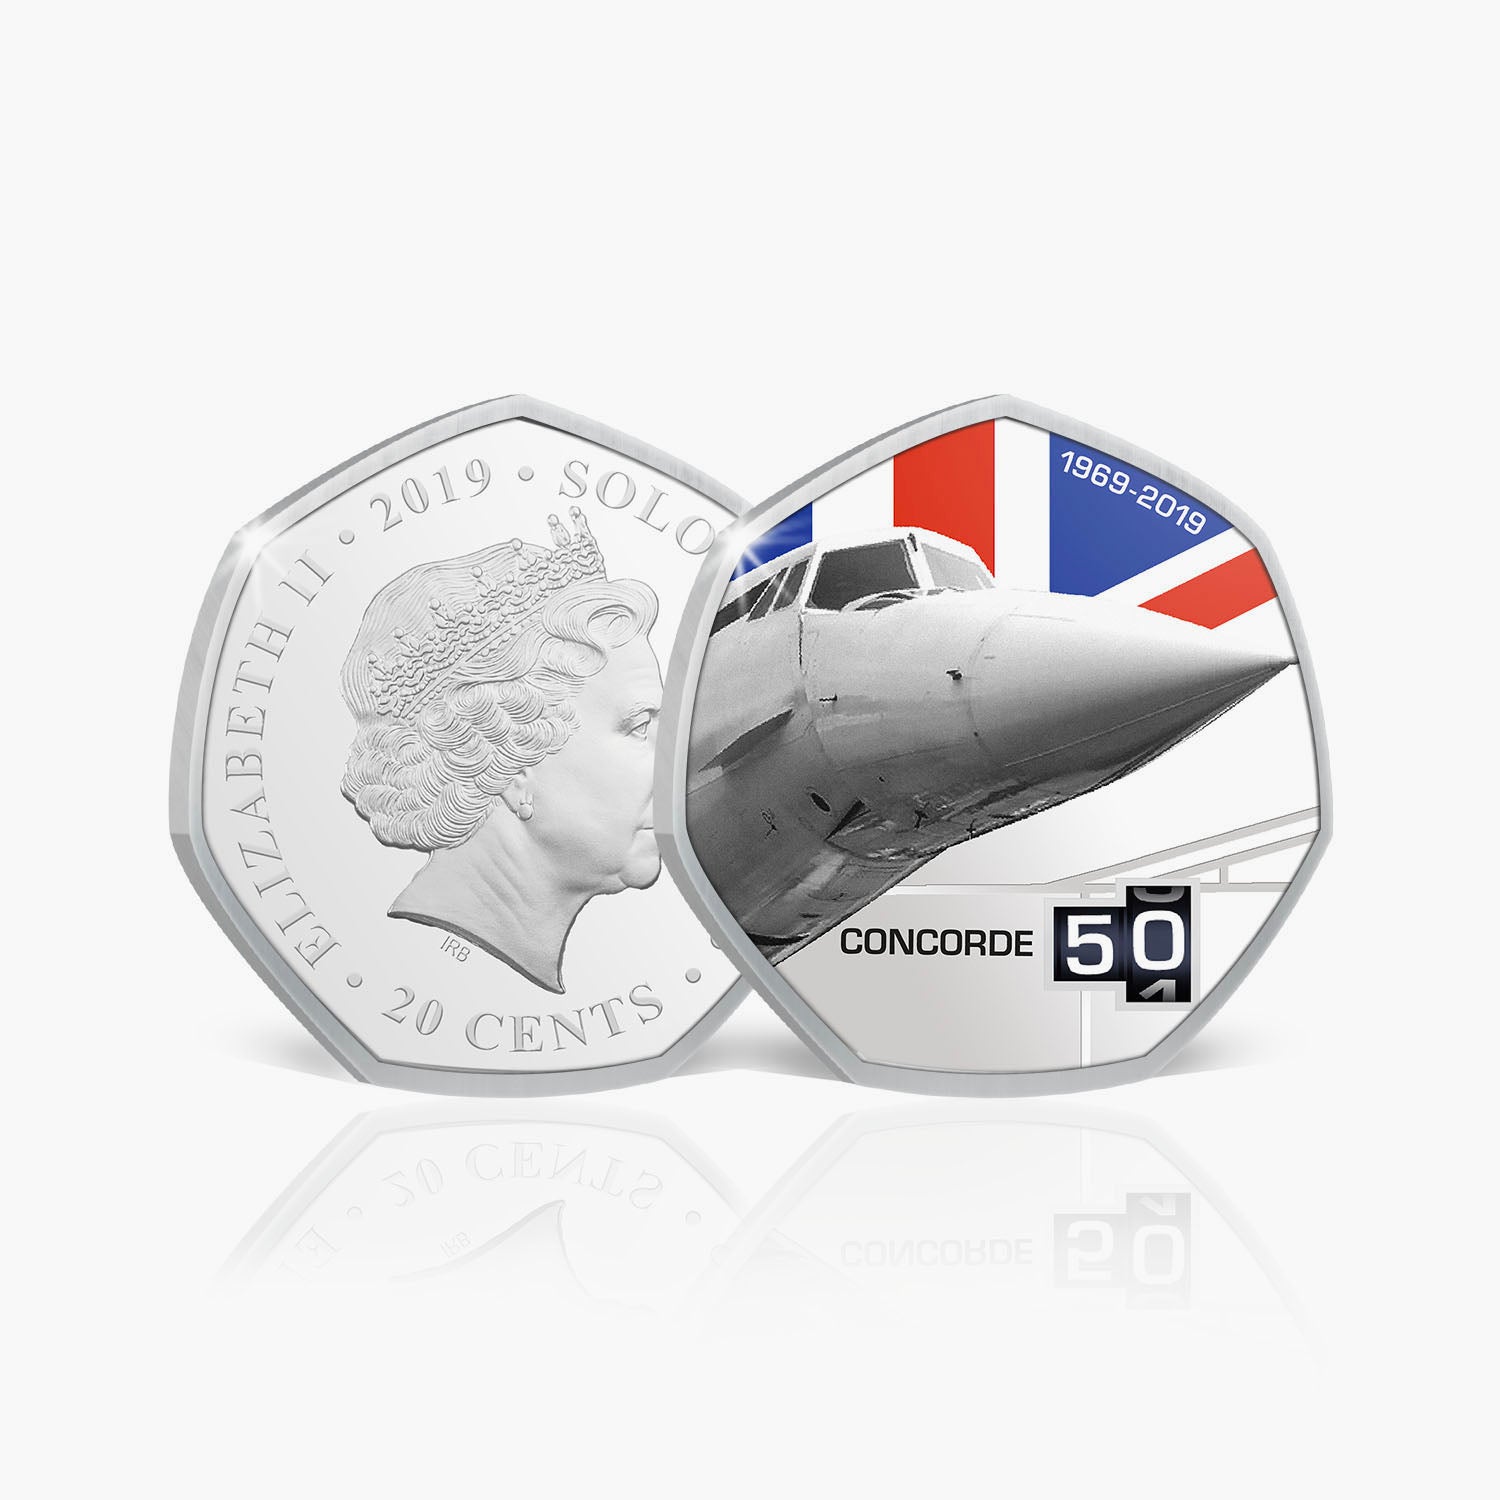 Concorde 50th Anniversary Complete BU Coin Collection